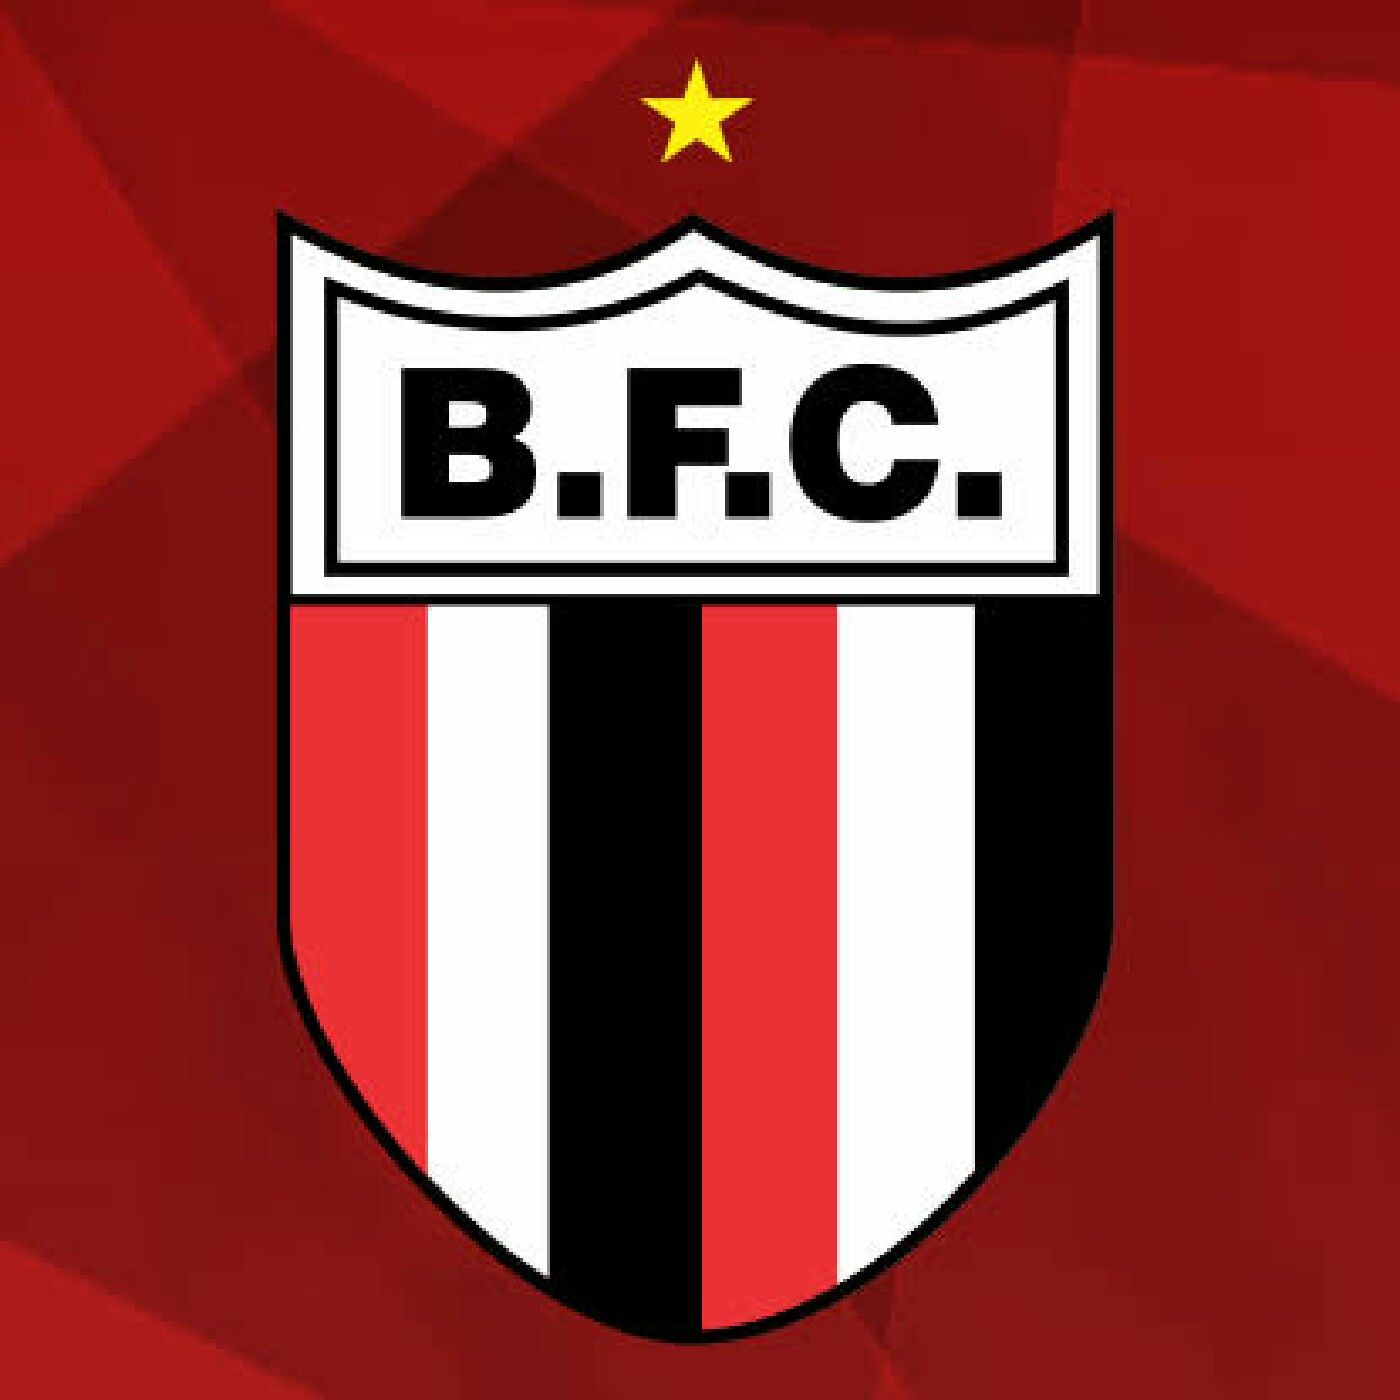 Botafogo Futebol Clube